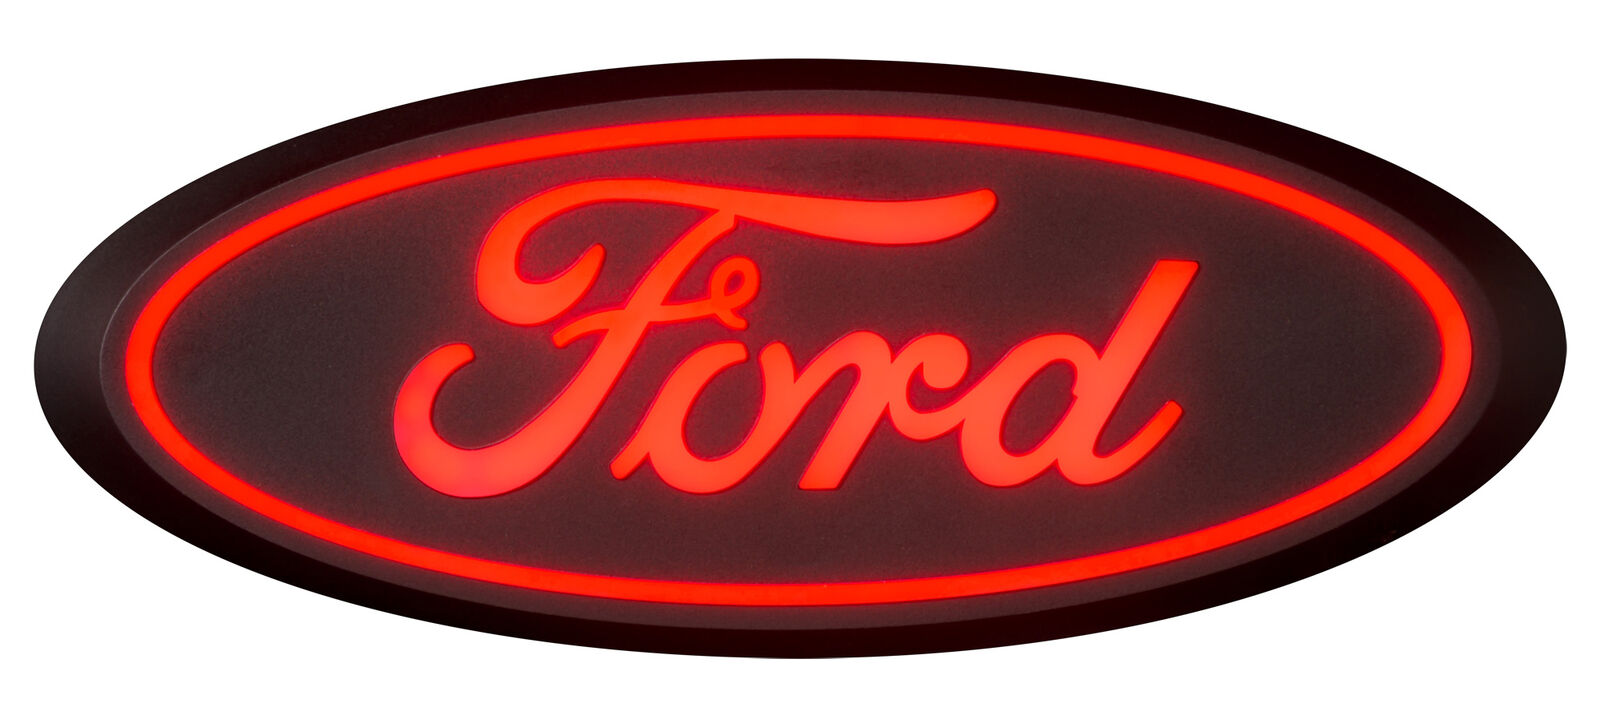 Ford f350 led badge - triplelasopa